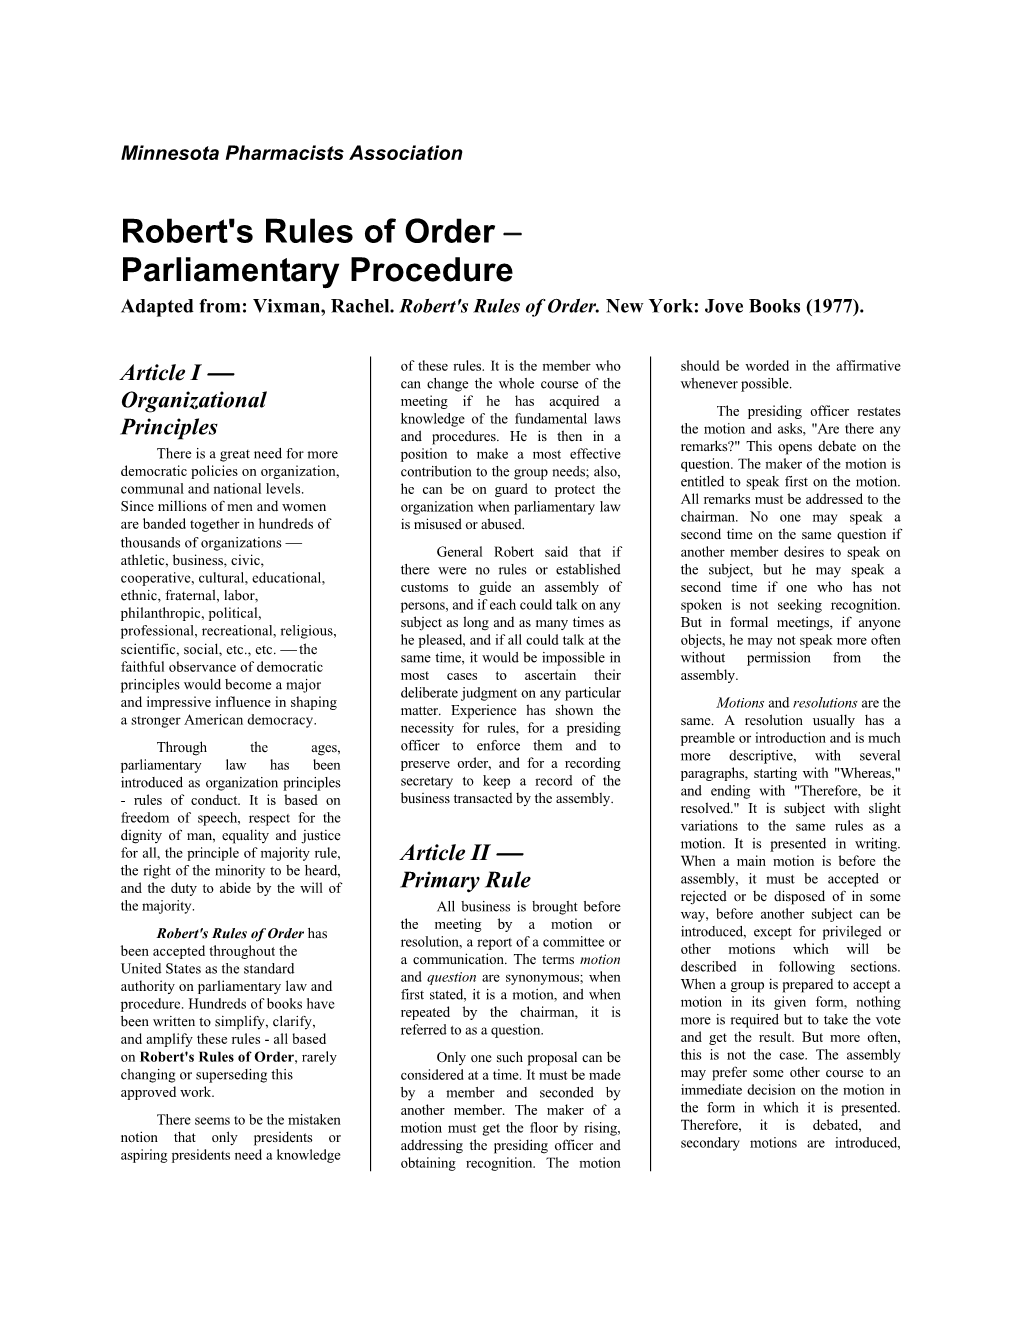 Robert's Rules of Order − Parliamentary Procedure Adapted From: Vixman, Rachel